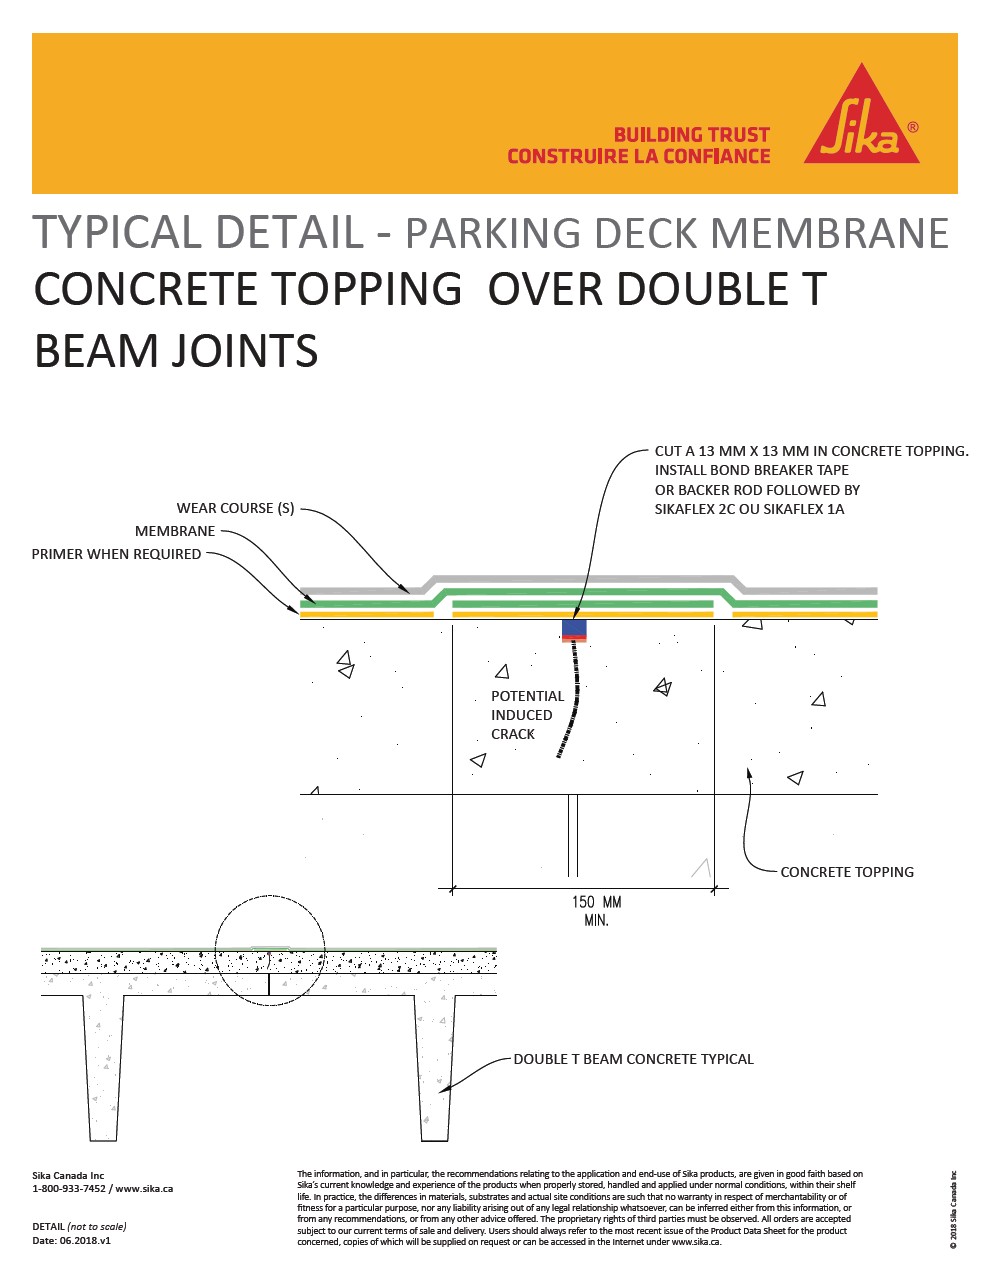 Parking Deck Membrane - Typical Details Booklet